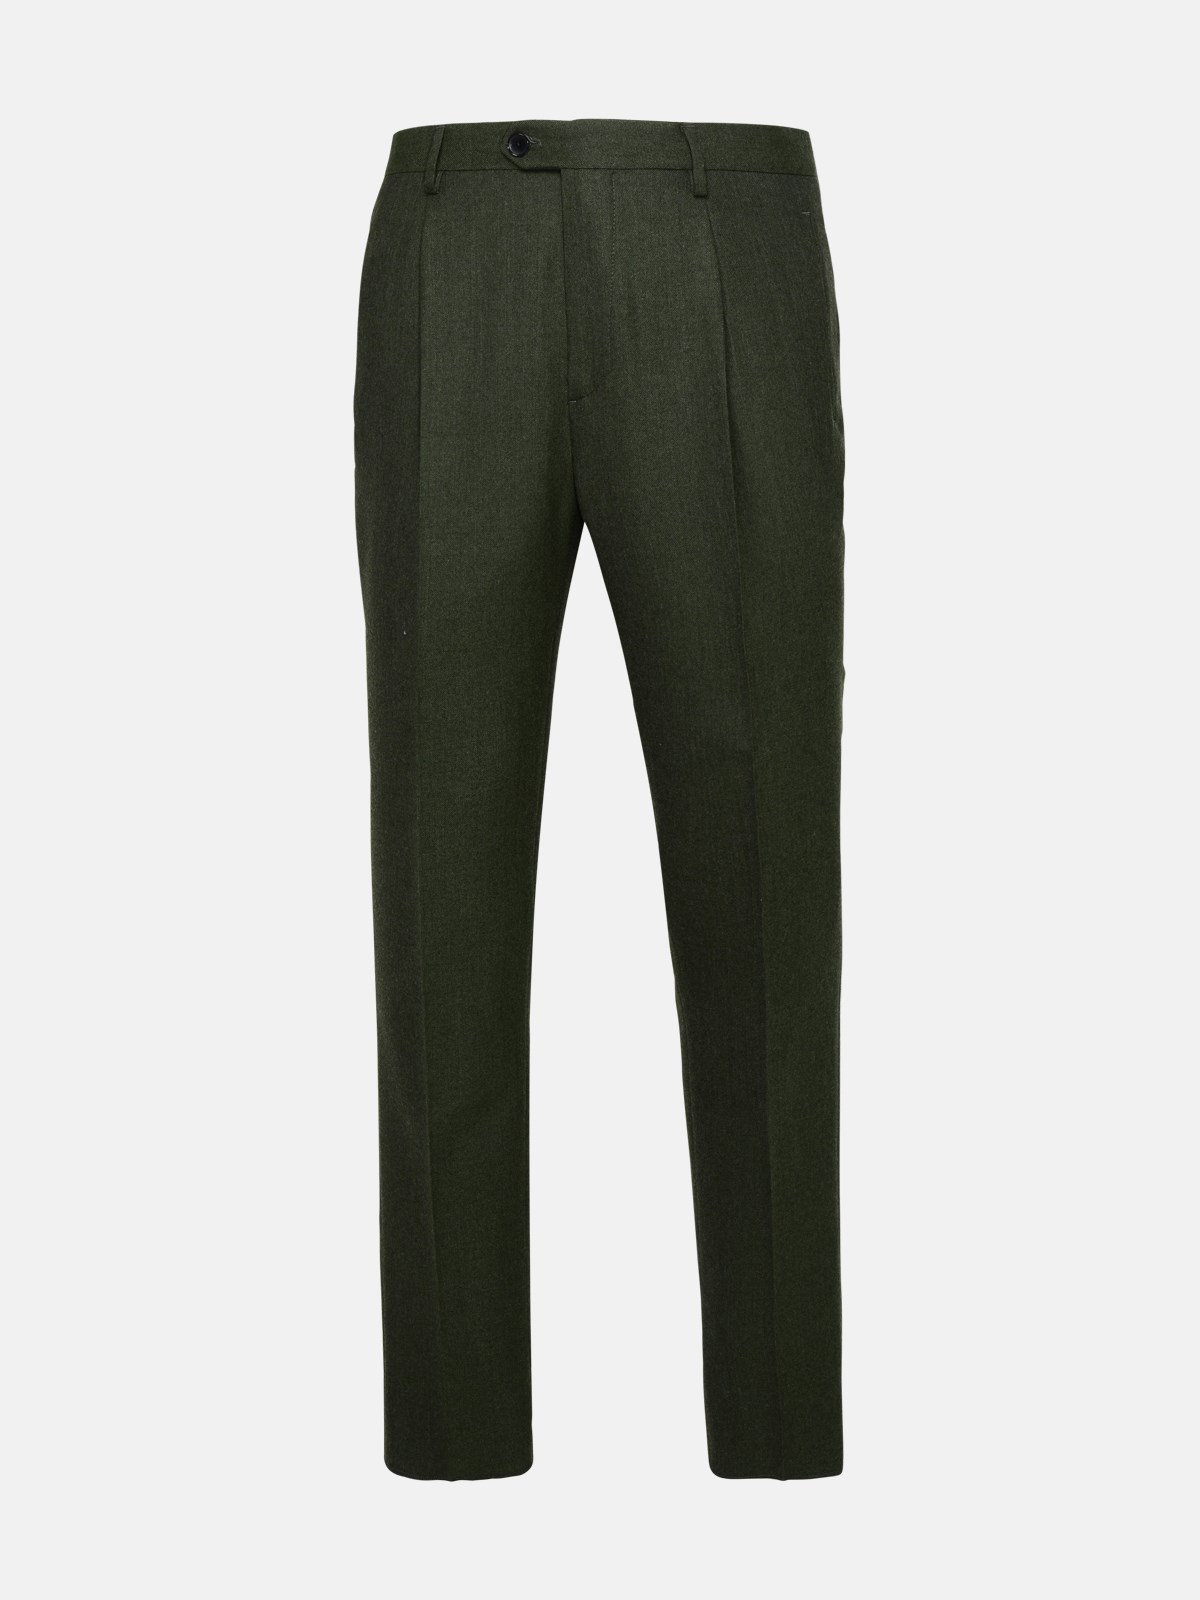 Etro Green Wool Pants